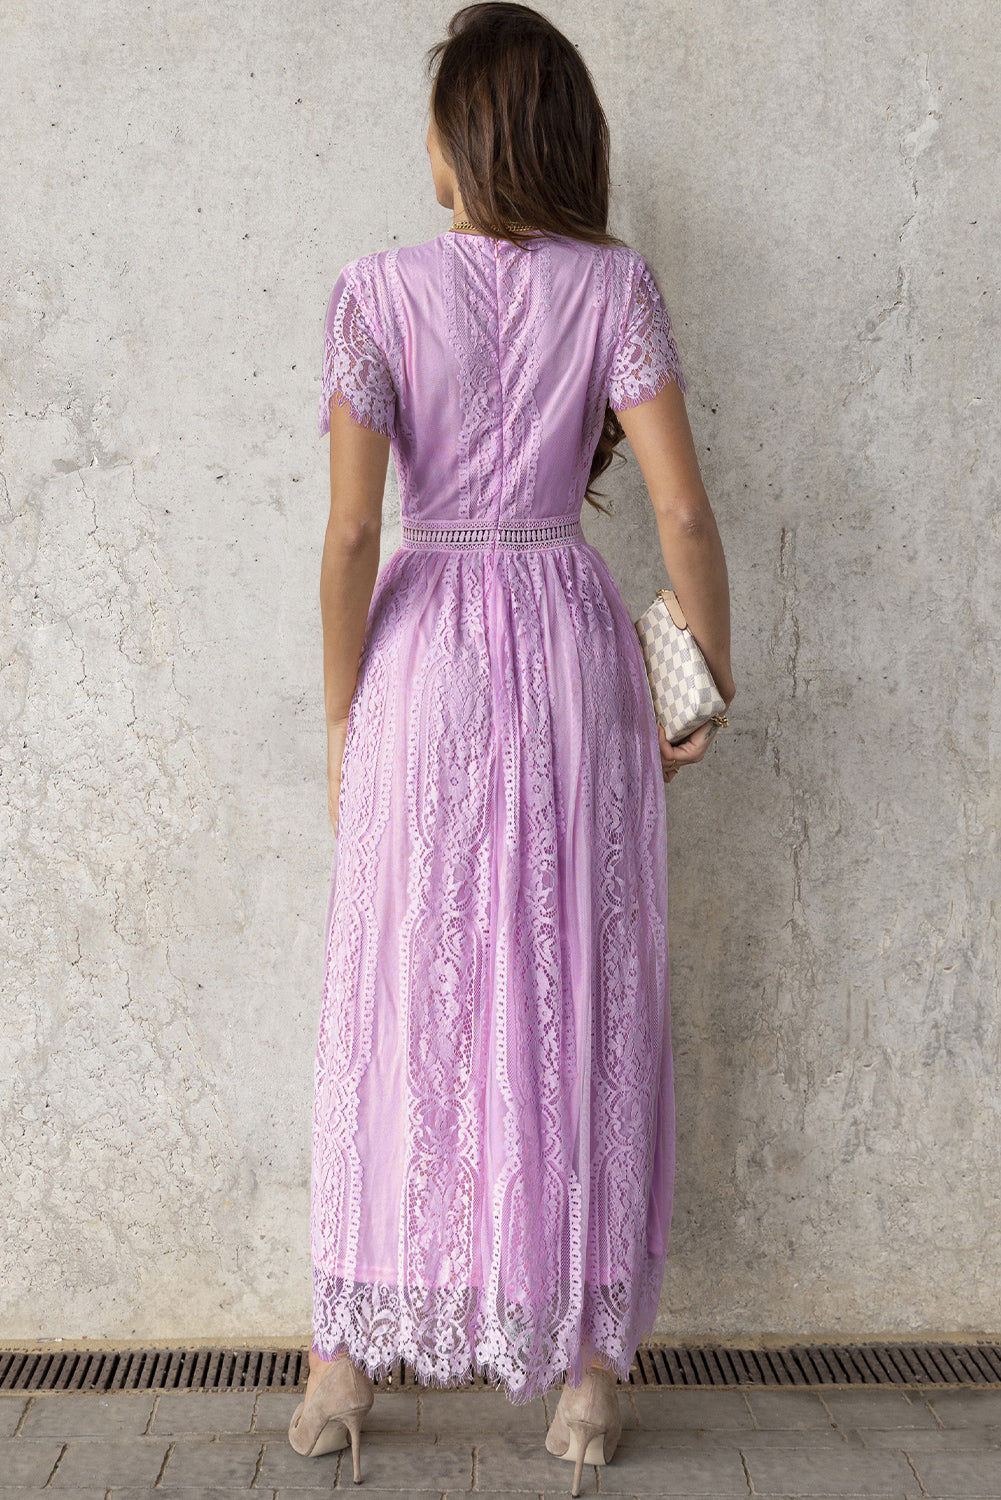 Scalloped Trim Lace Plunge Dress - Shop women apparel, Jewelry, bath & beauty products online - Arwen's Boutique